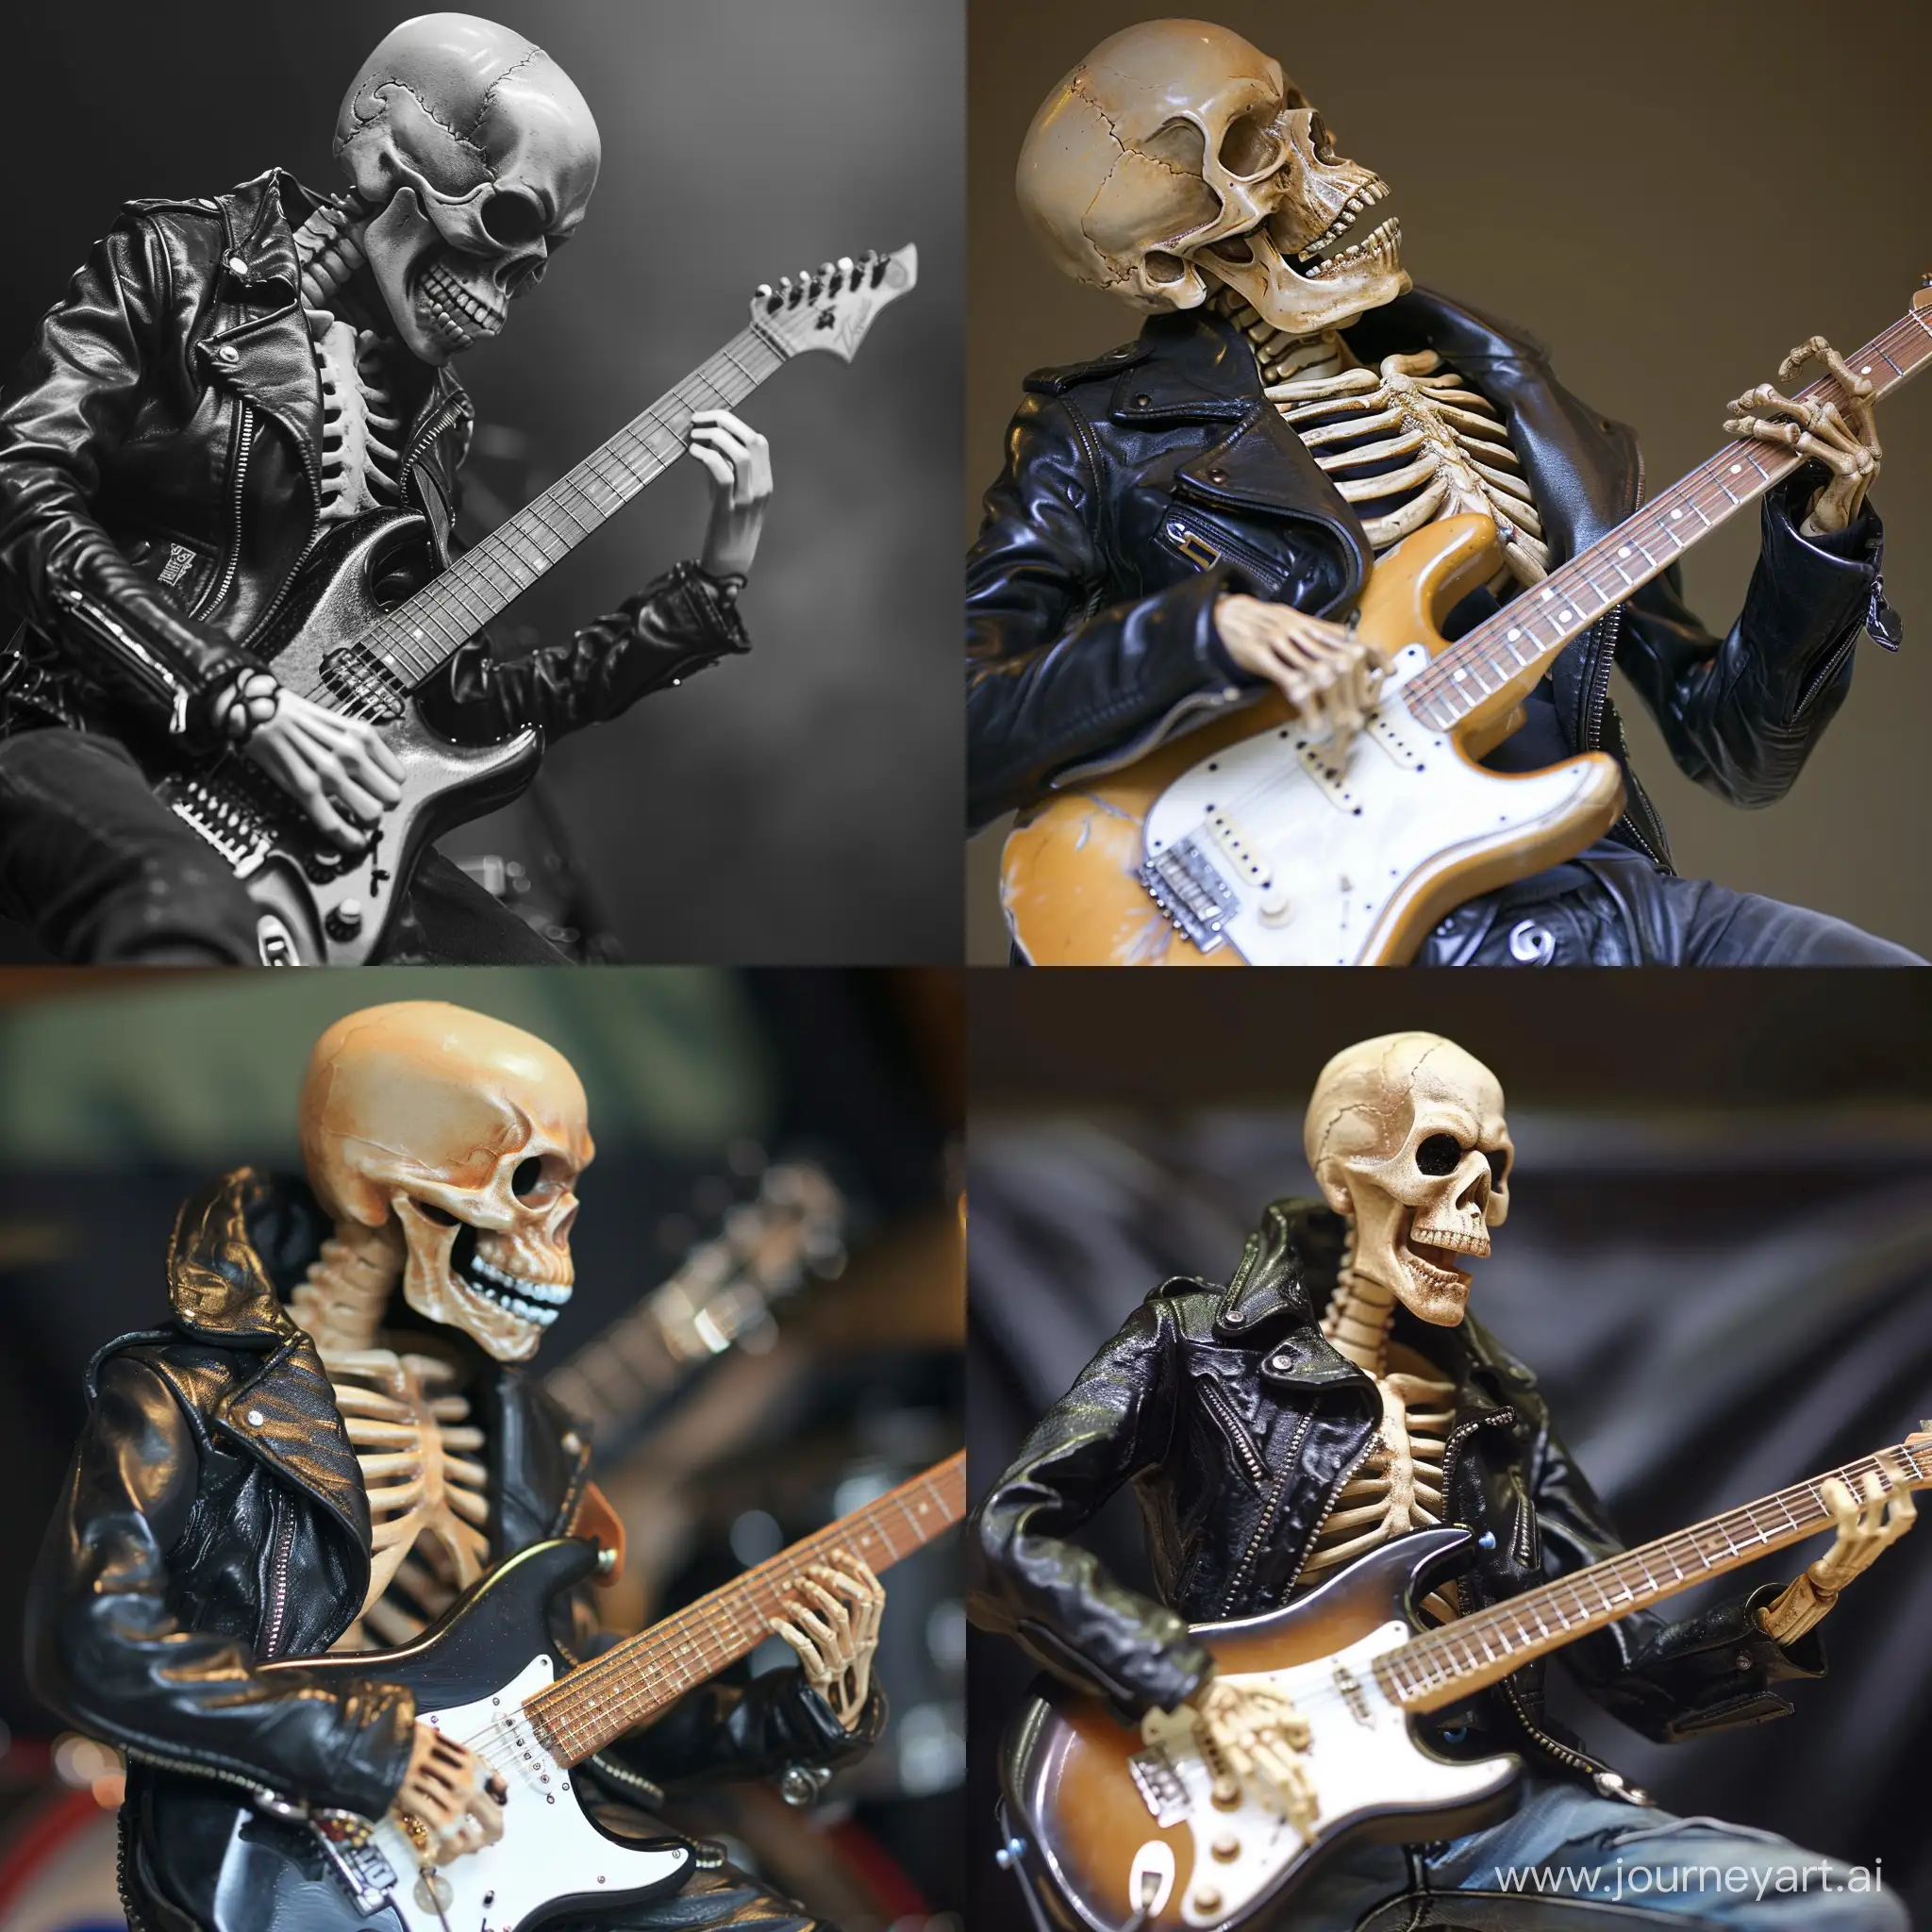 Skeleton, dressed in leather jacket, play on electro guitar, rock fest